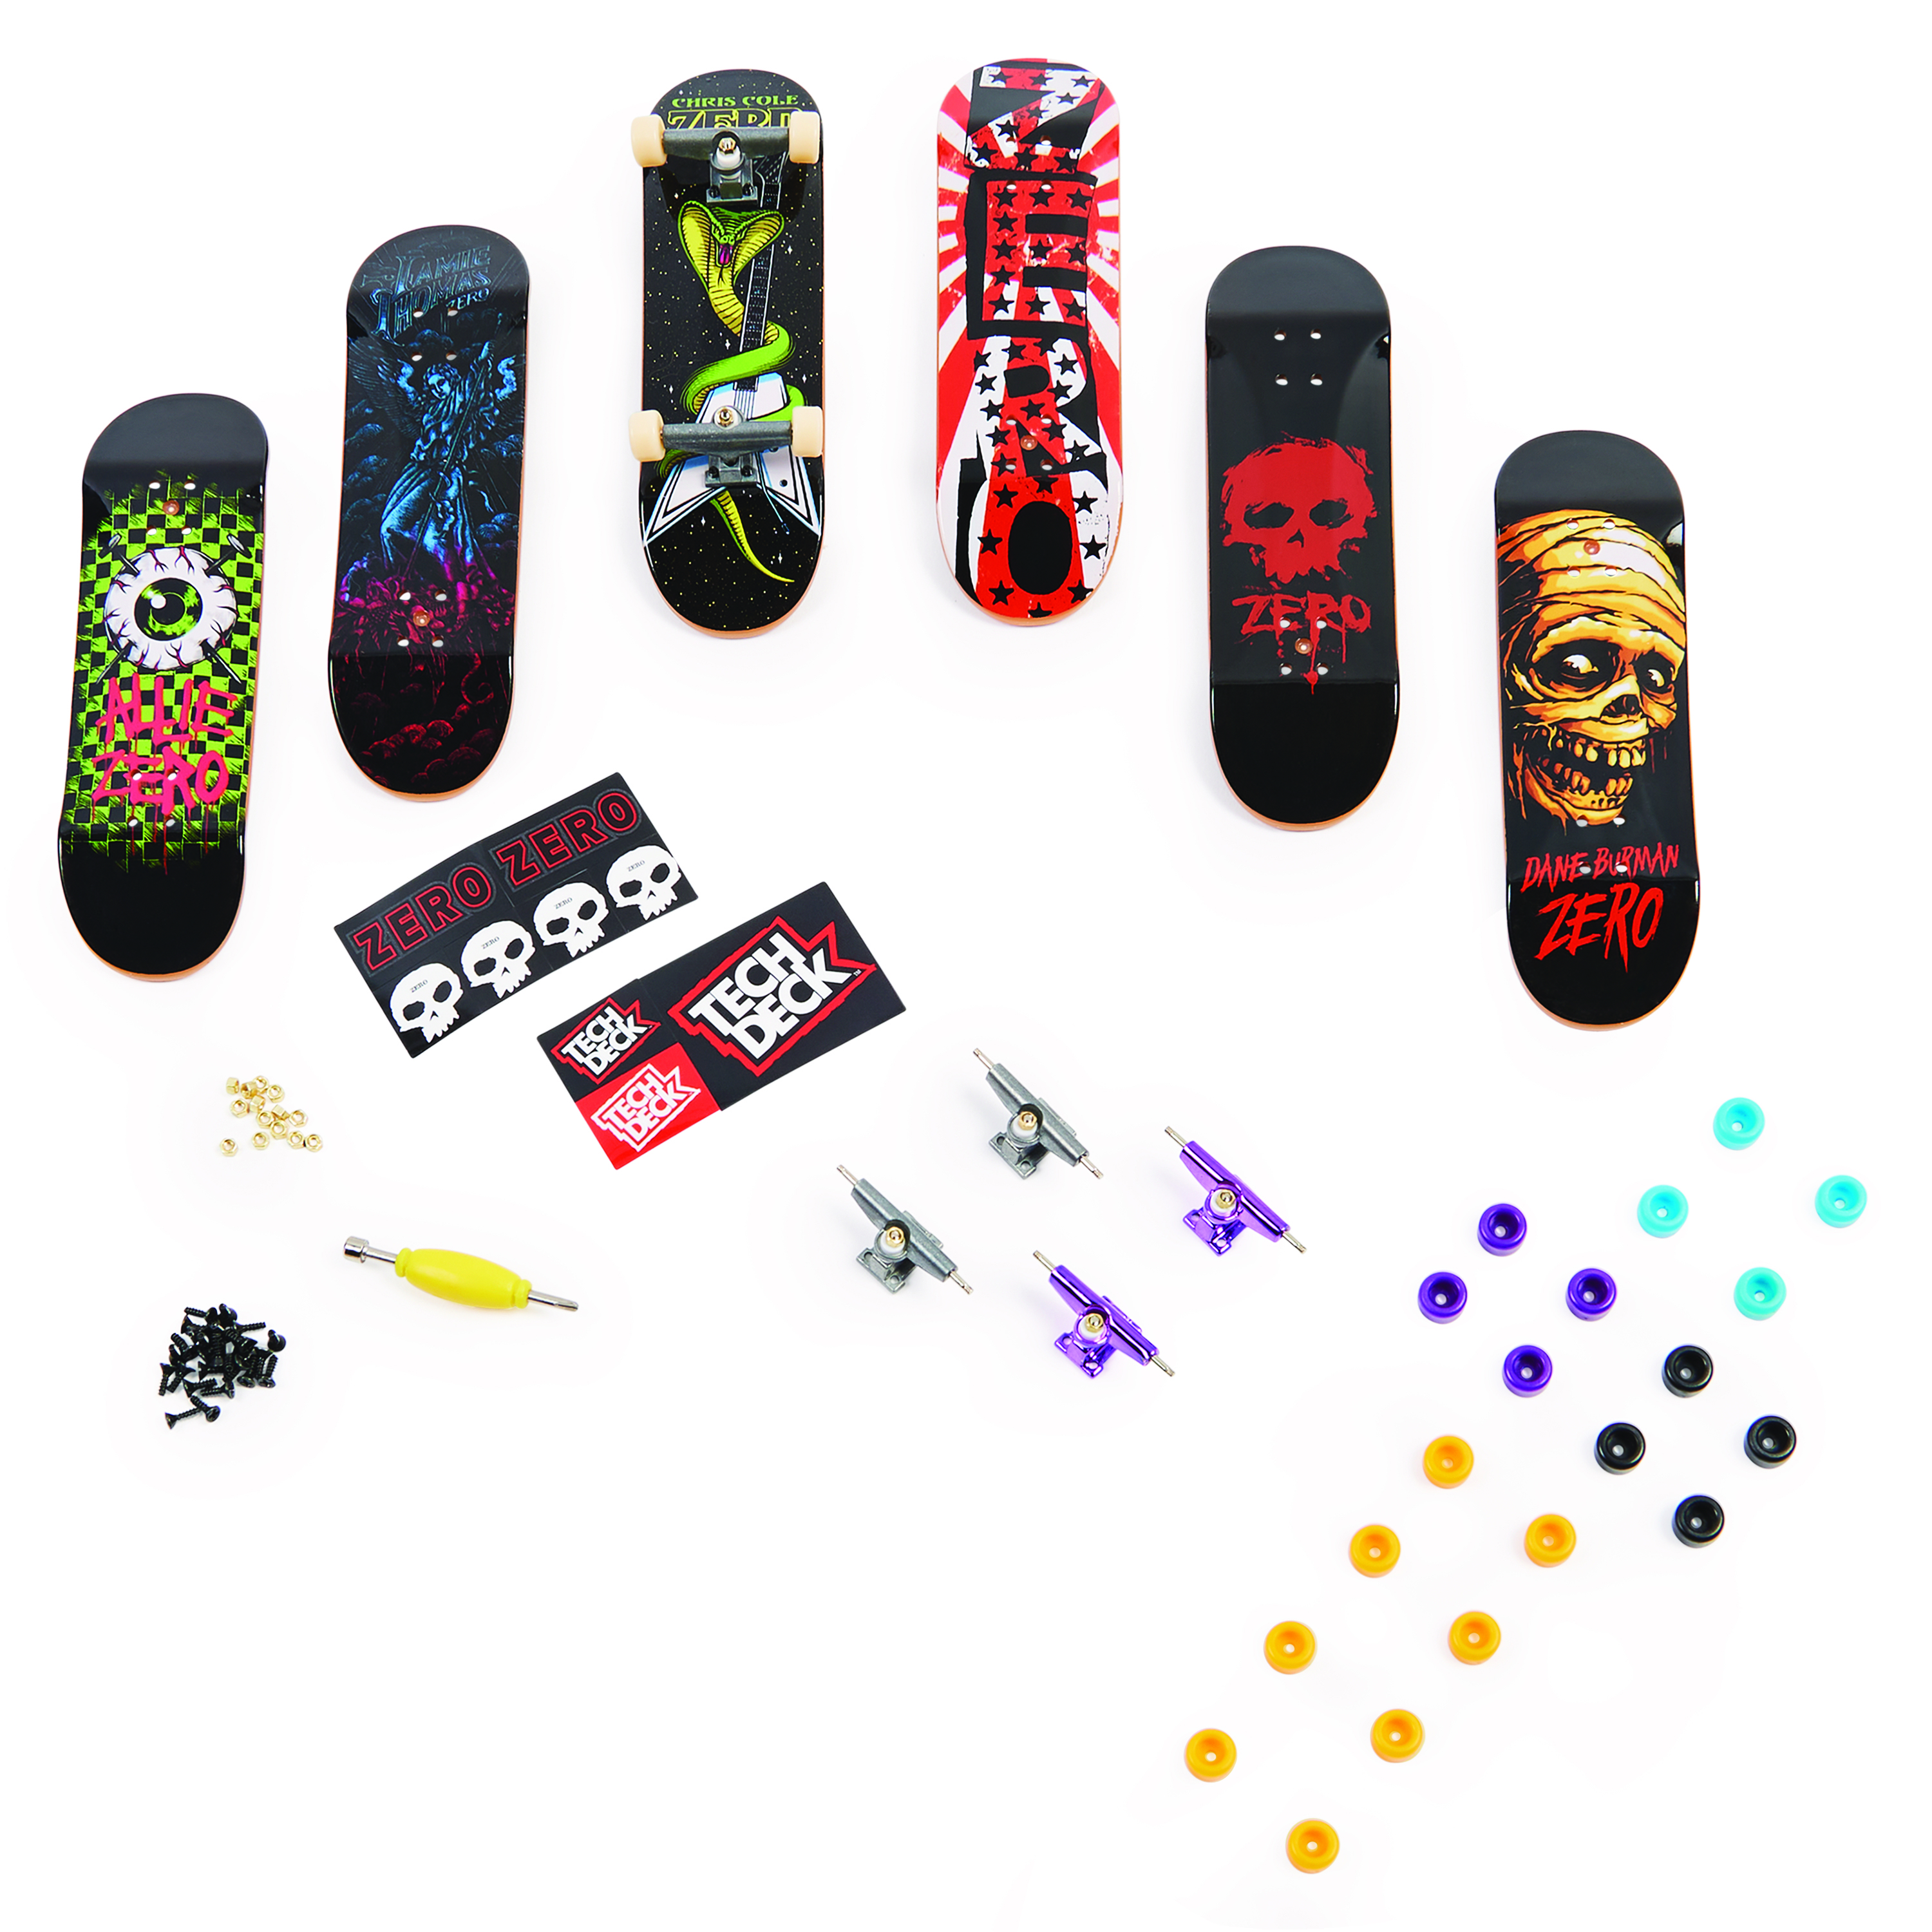 tech deck skate shop bonus pack surtidos( spin master 6028845)